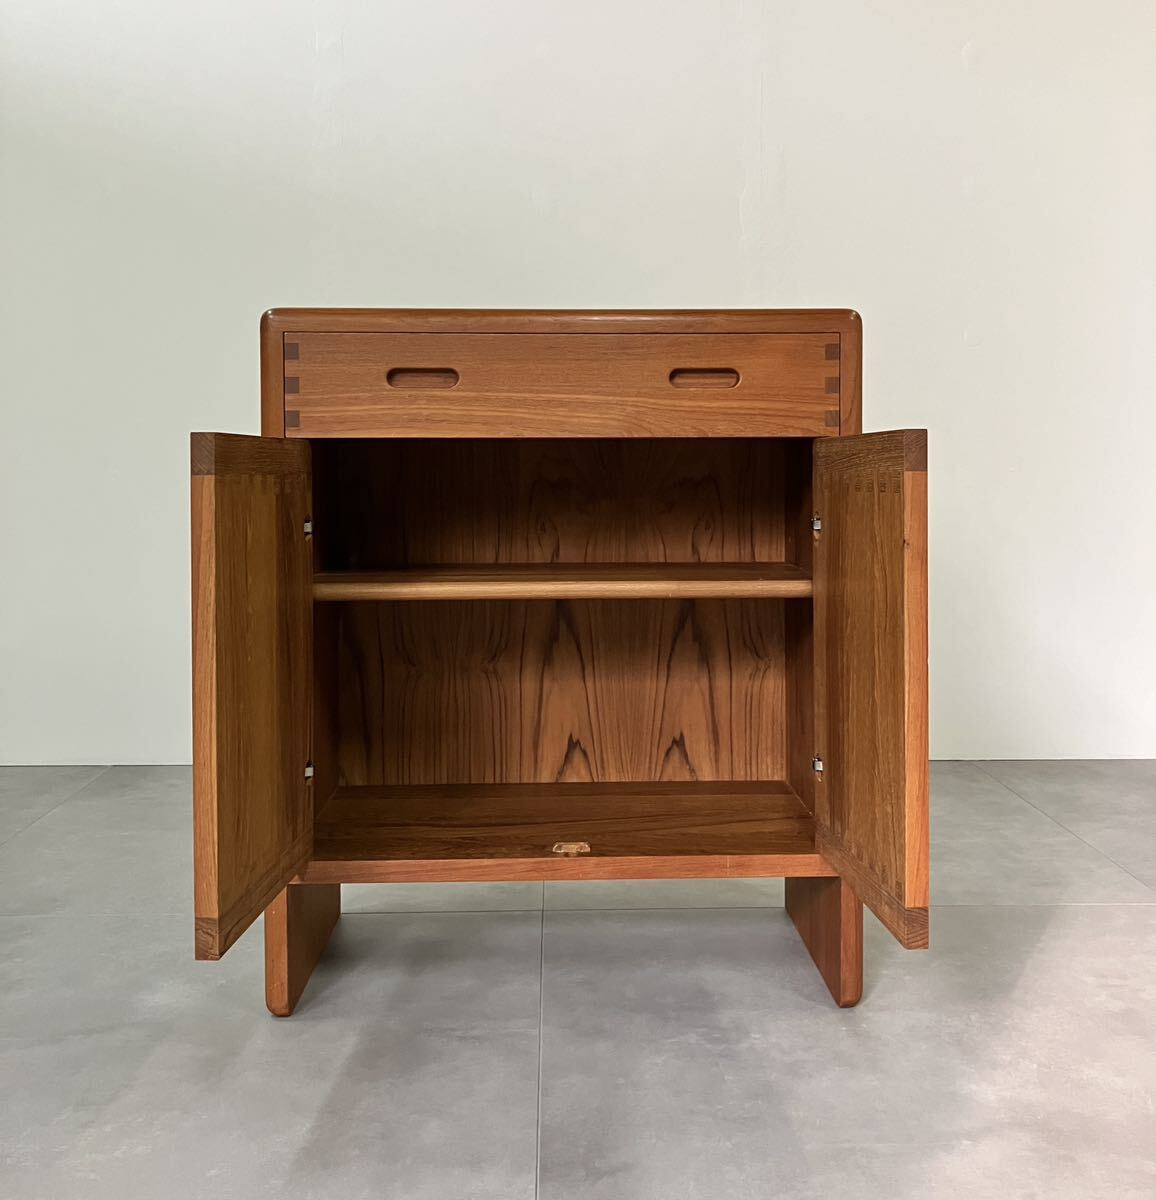  Denmark Niels Bach Mobelfabrik Neal sba is cabinet / Northern Europe Vintage Wegner kai * Christian sen furniture chest 